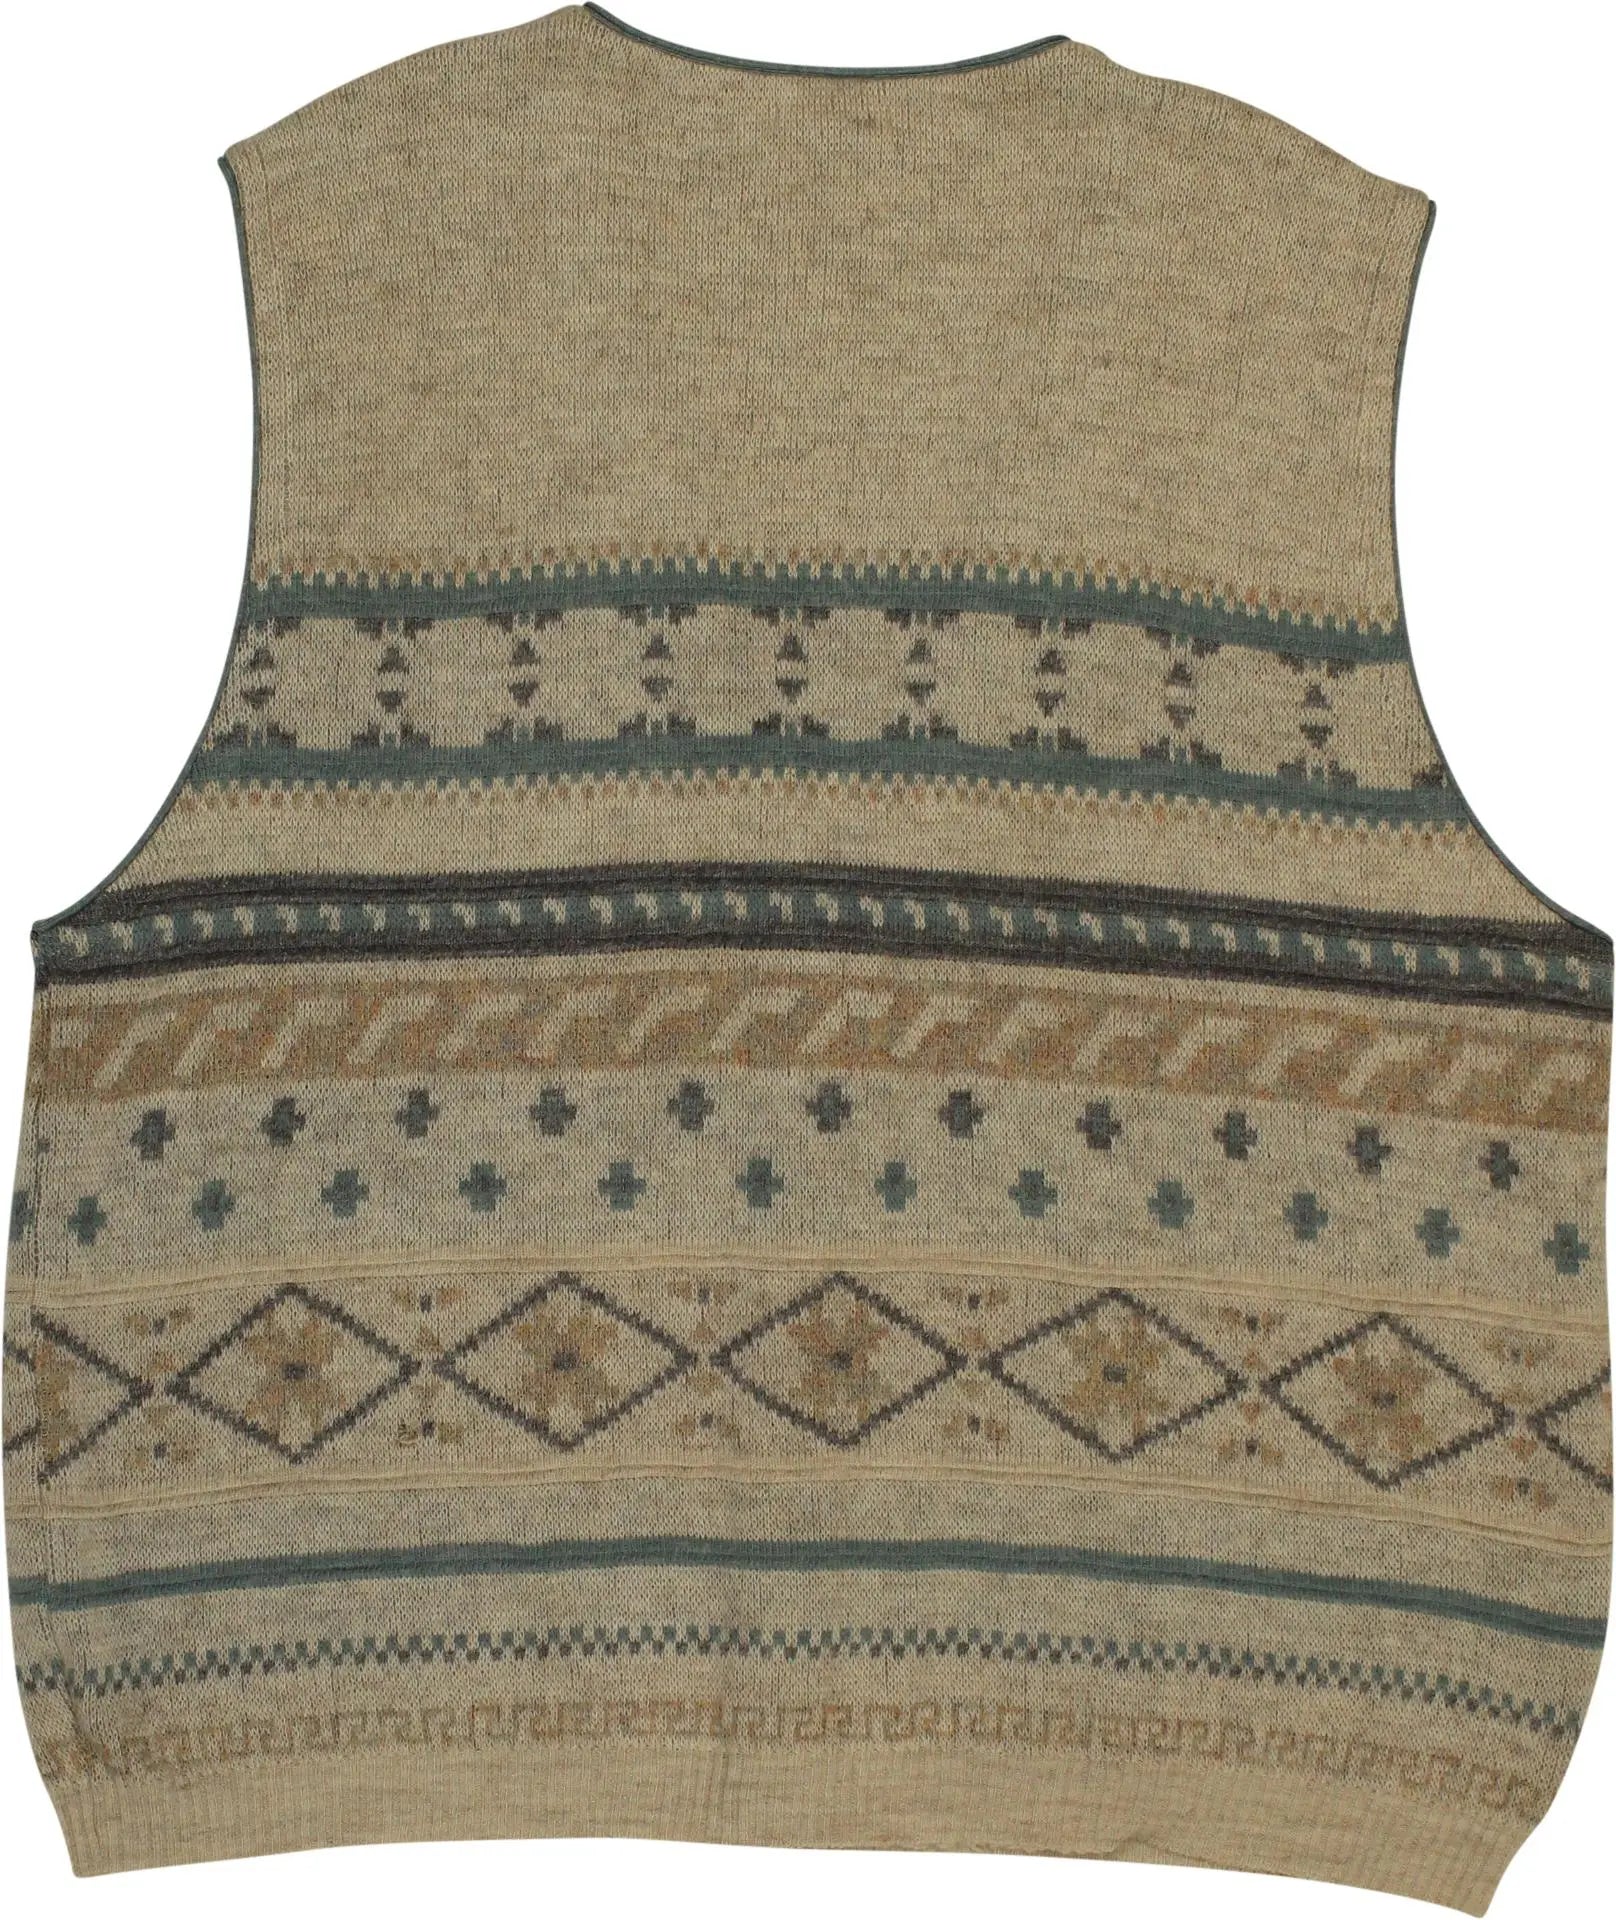 Liabel - 90's Vest- ThriftTale.com - Vintage and second handclothing